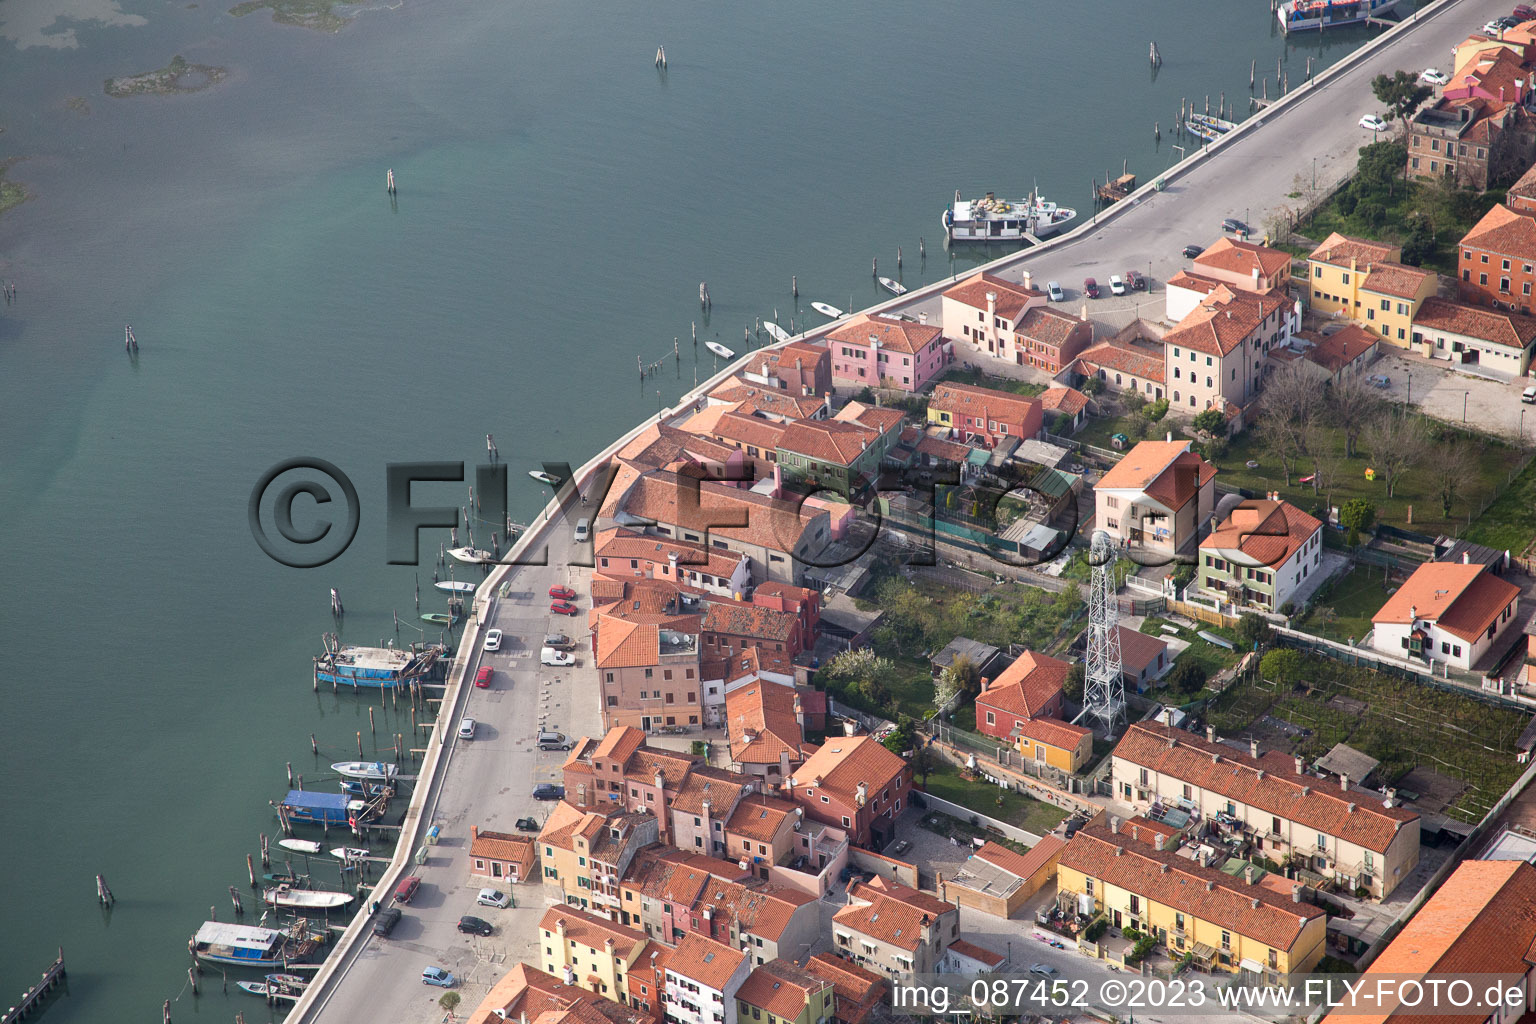 Townscape on the seacoast of Mediterranean Sea in San Vito in Veneto, Italy